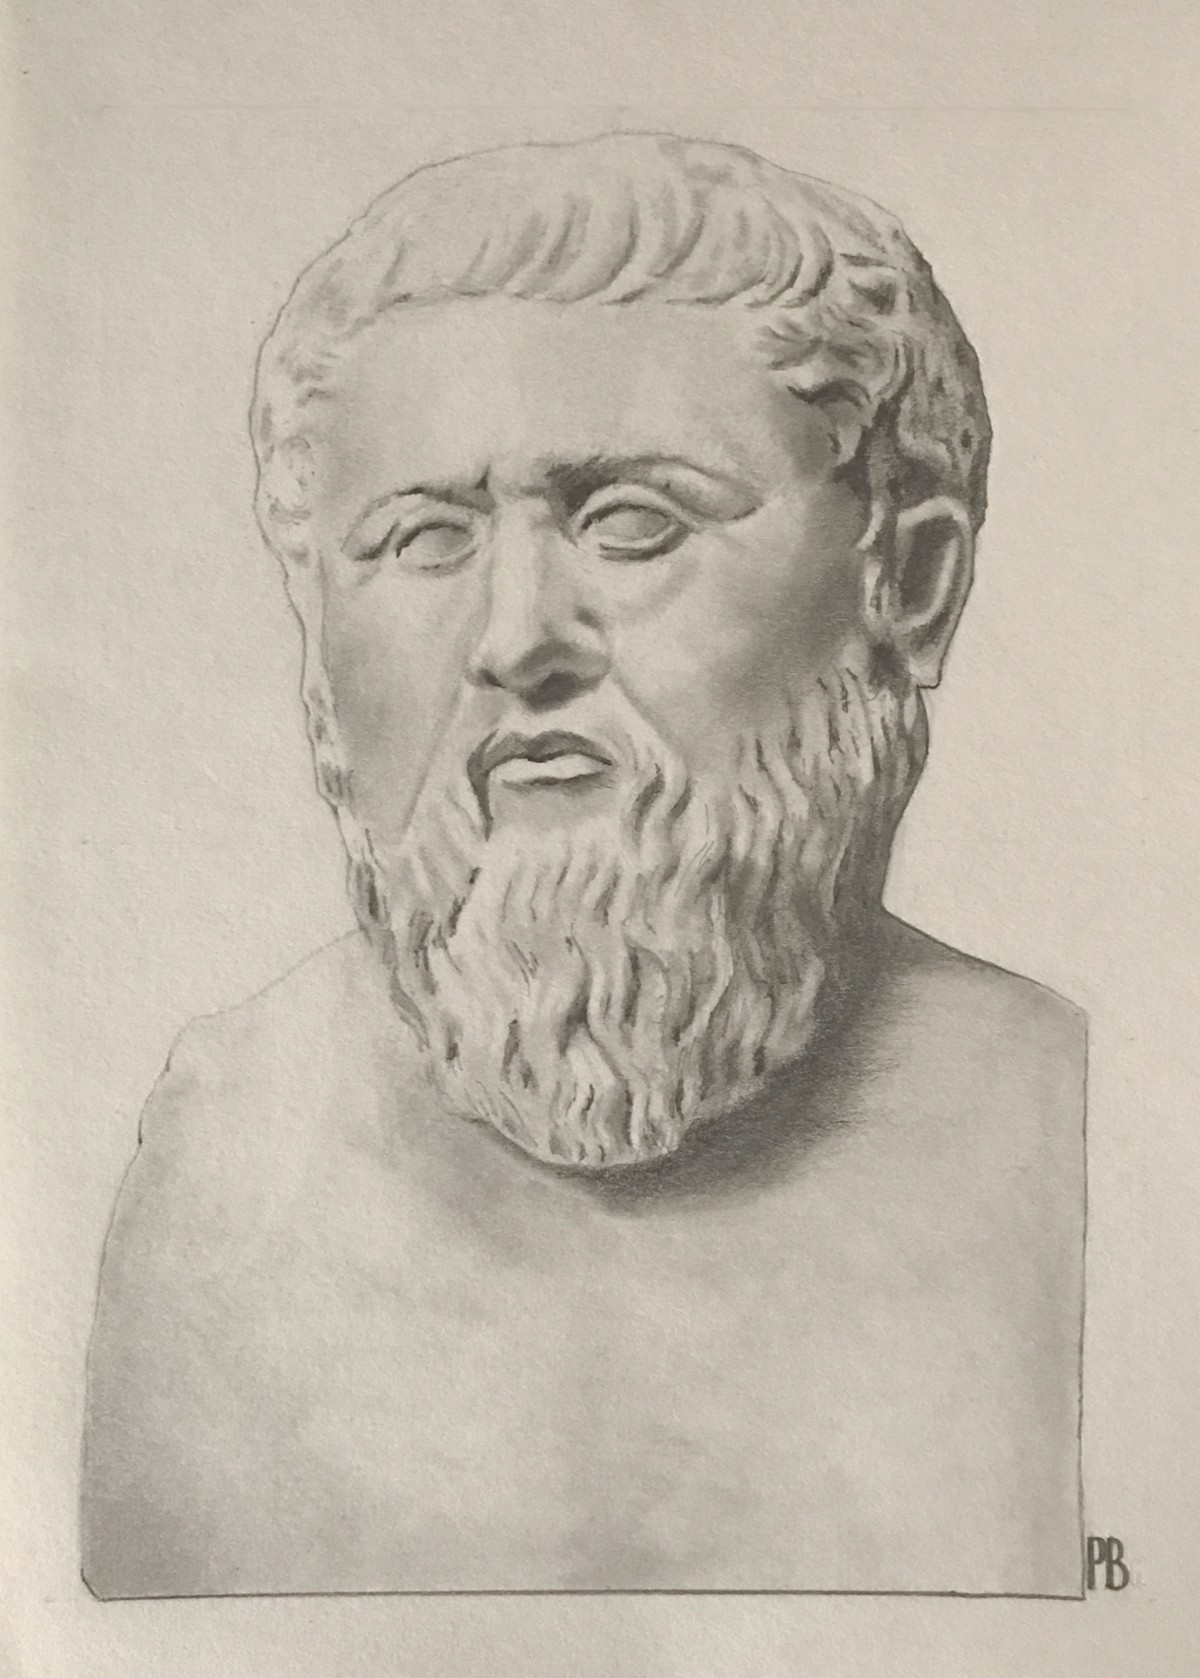 Plato bust sketch